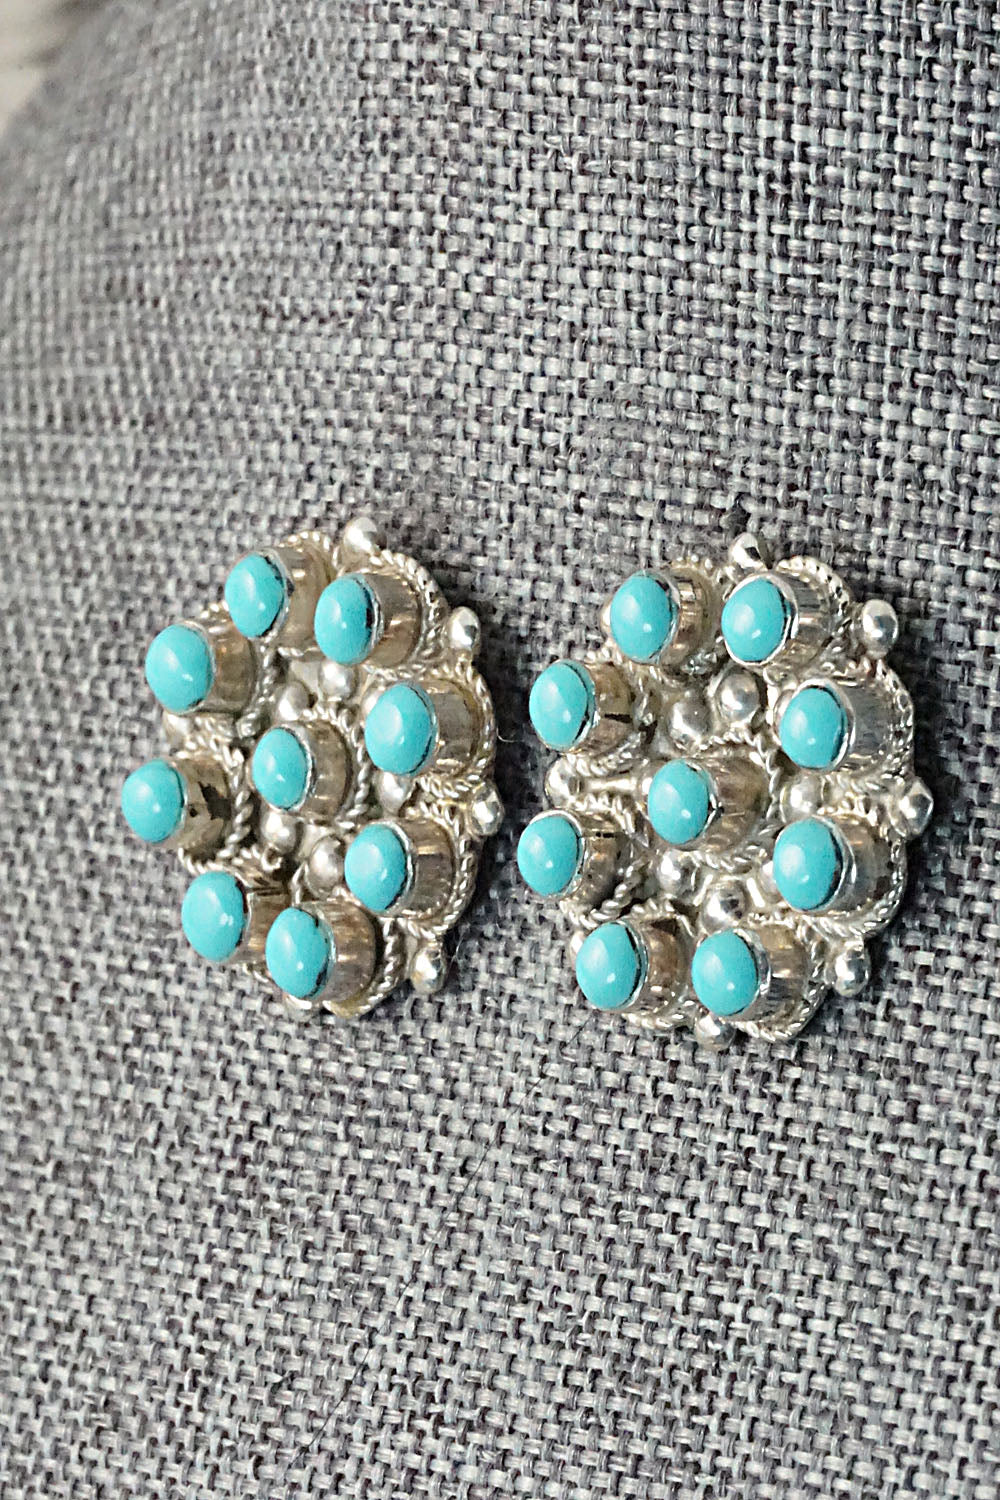 Turquoise & Sterling Silver Earrings - Terrance Panteah & Tammy Johnson